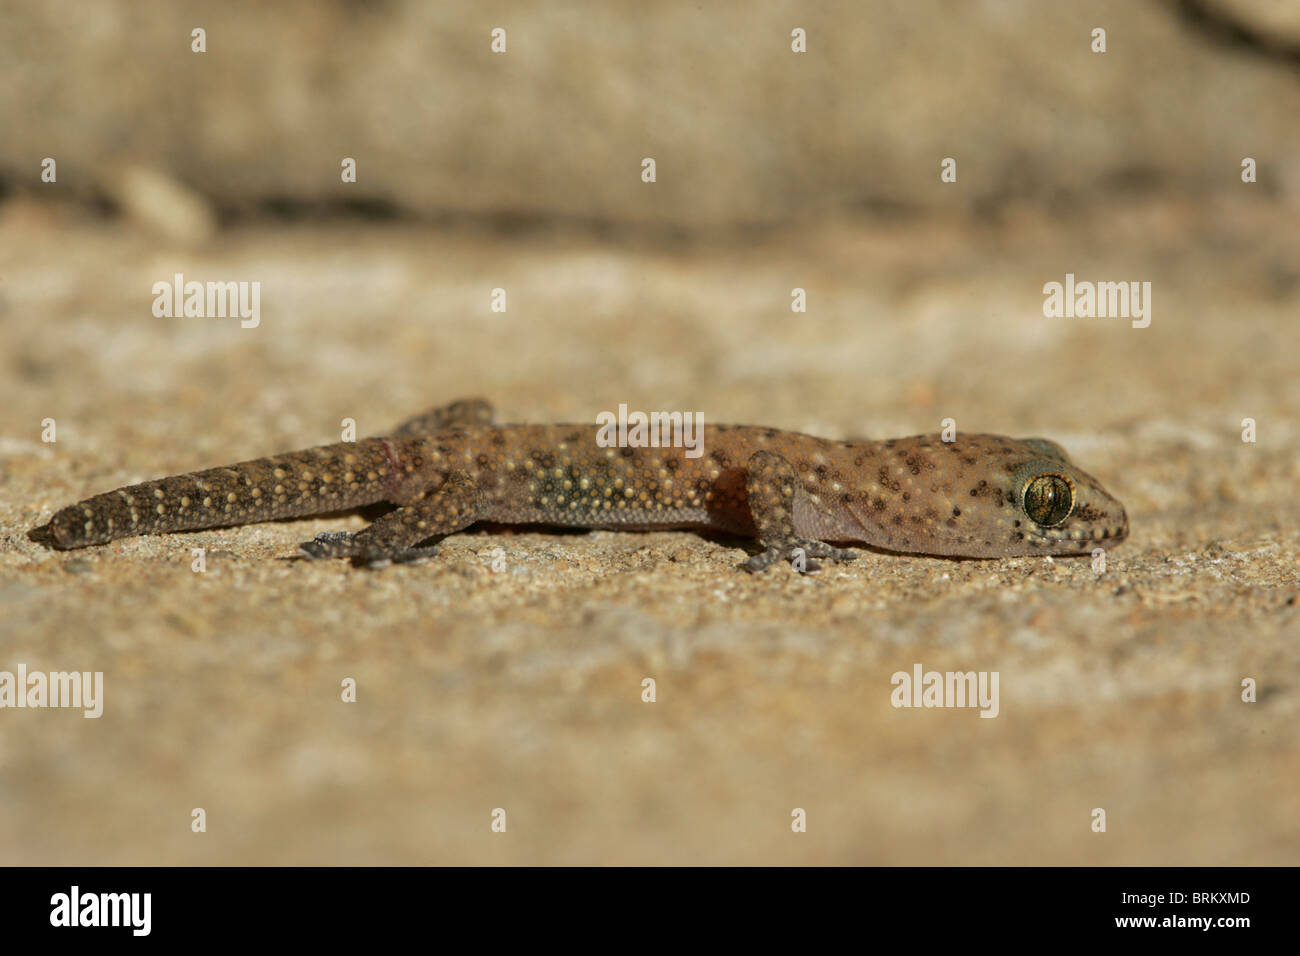 Gecko sunning itself on a rock Stock Photo